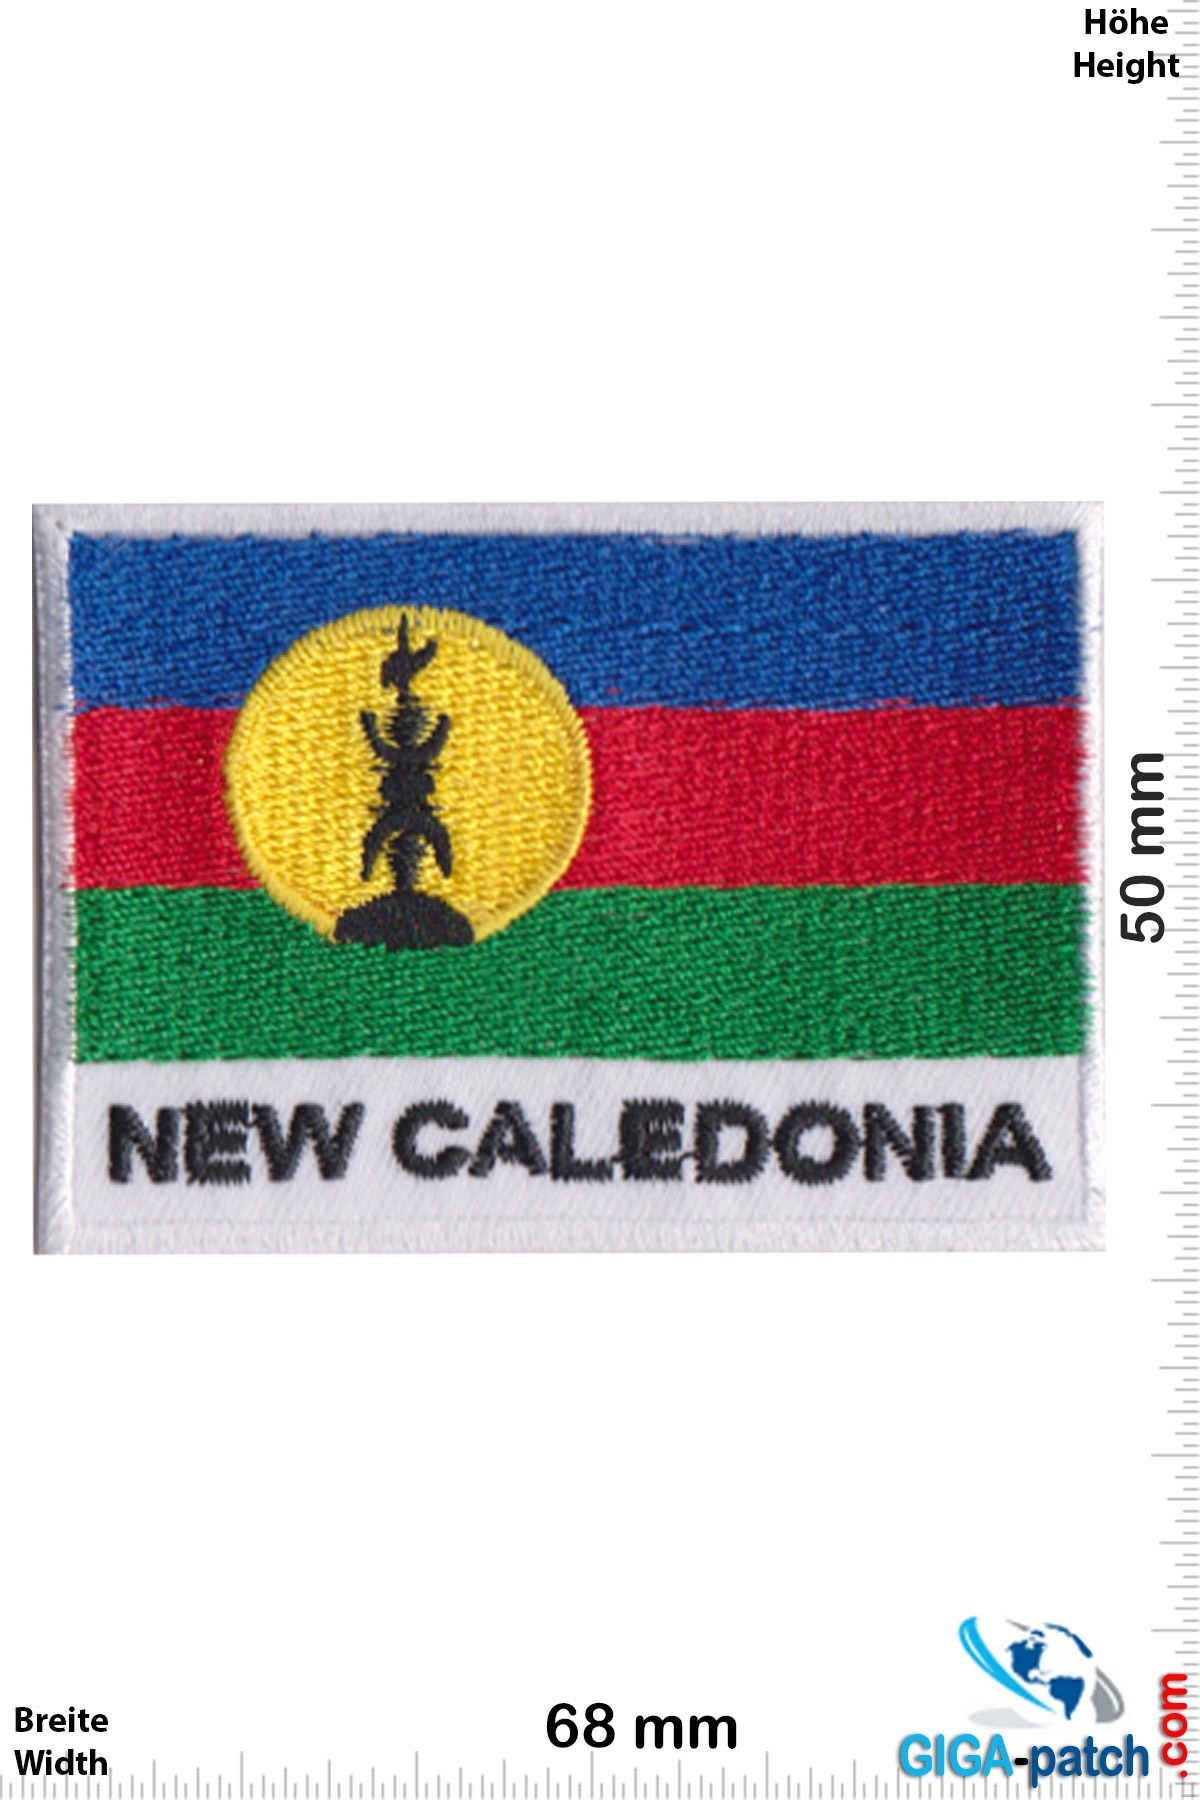 New Caledonia - Neukaledonien- Flagge